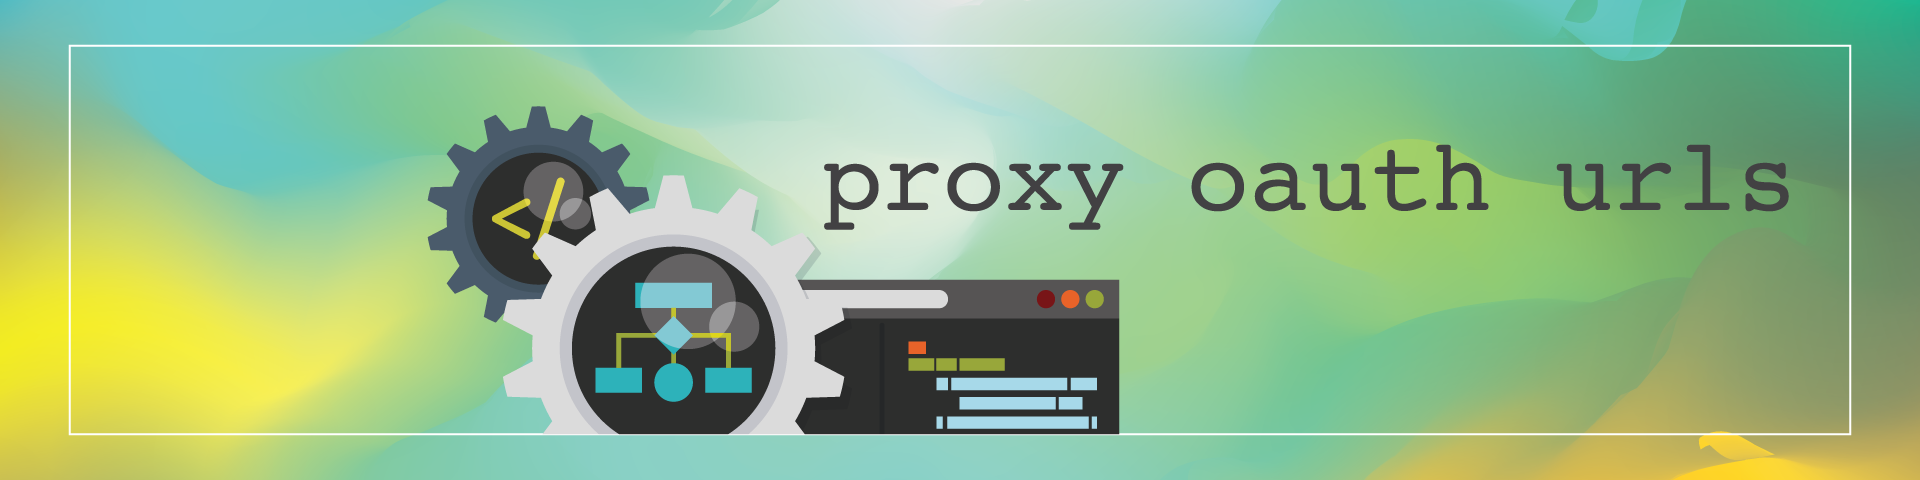 proxy-oauth-urls-blog-banner